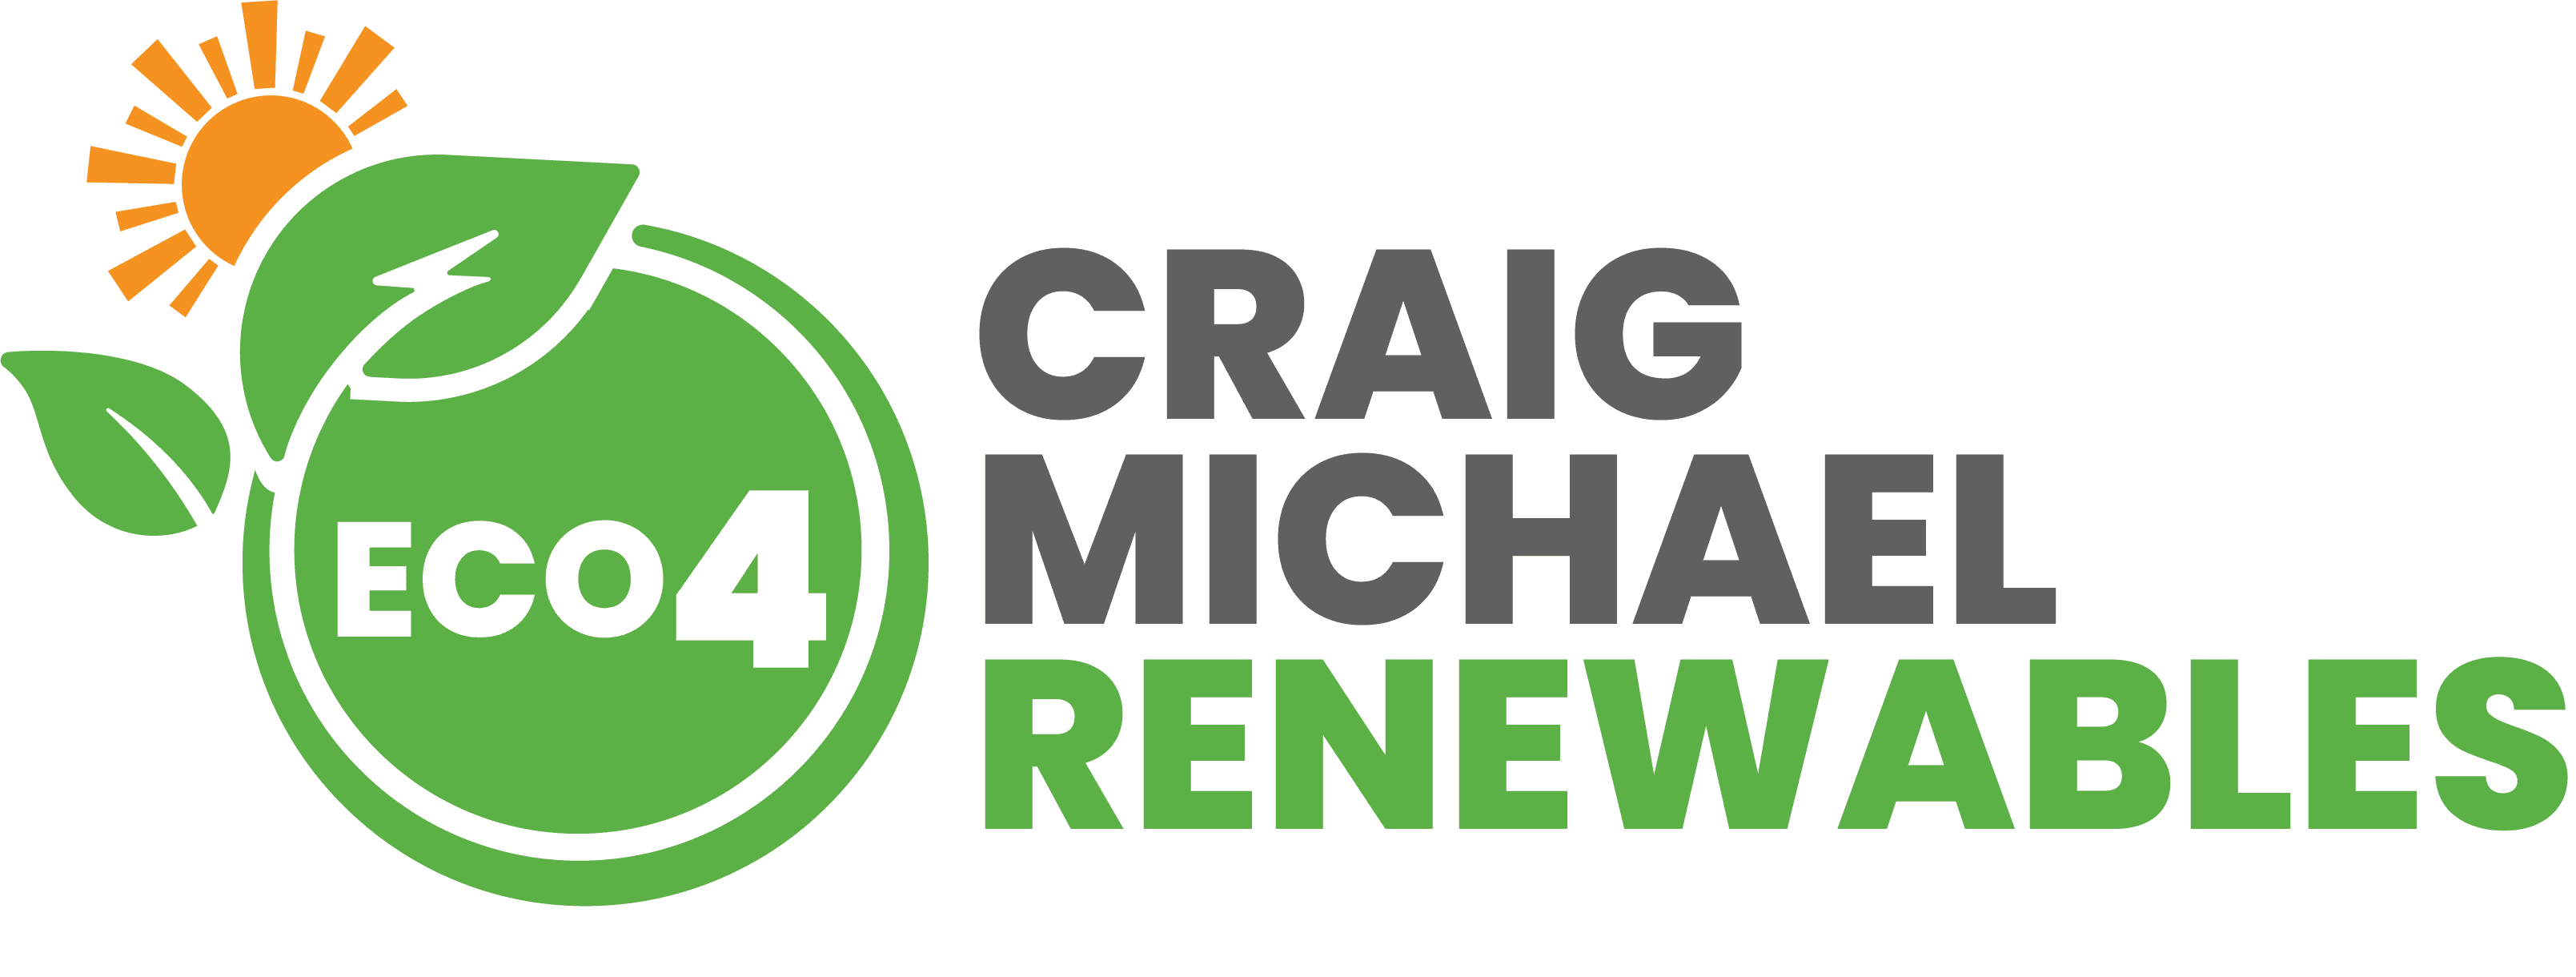 Craig Michael Renewables Brand